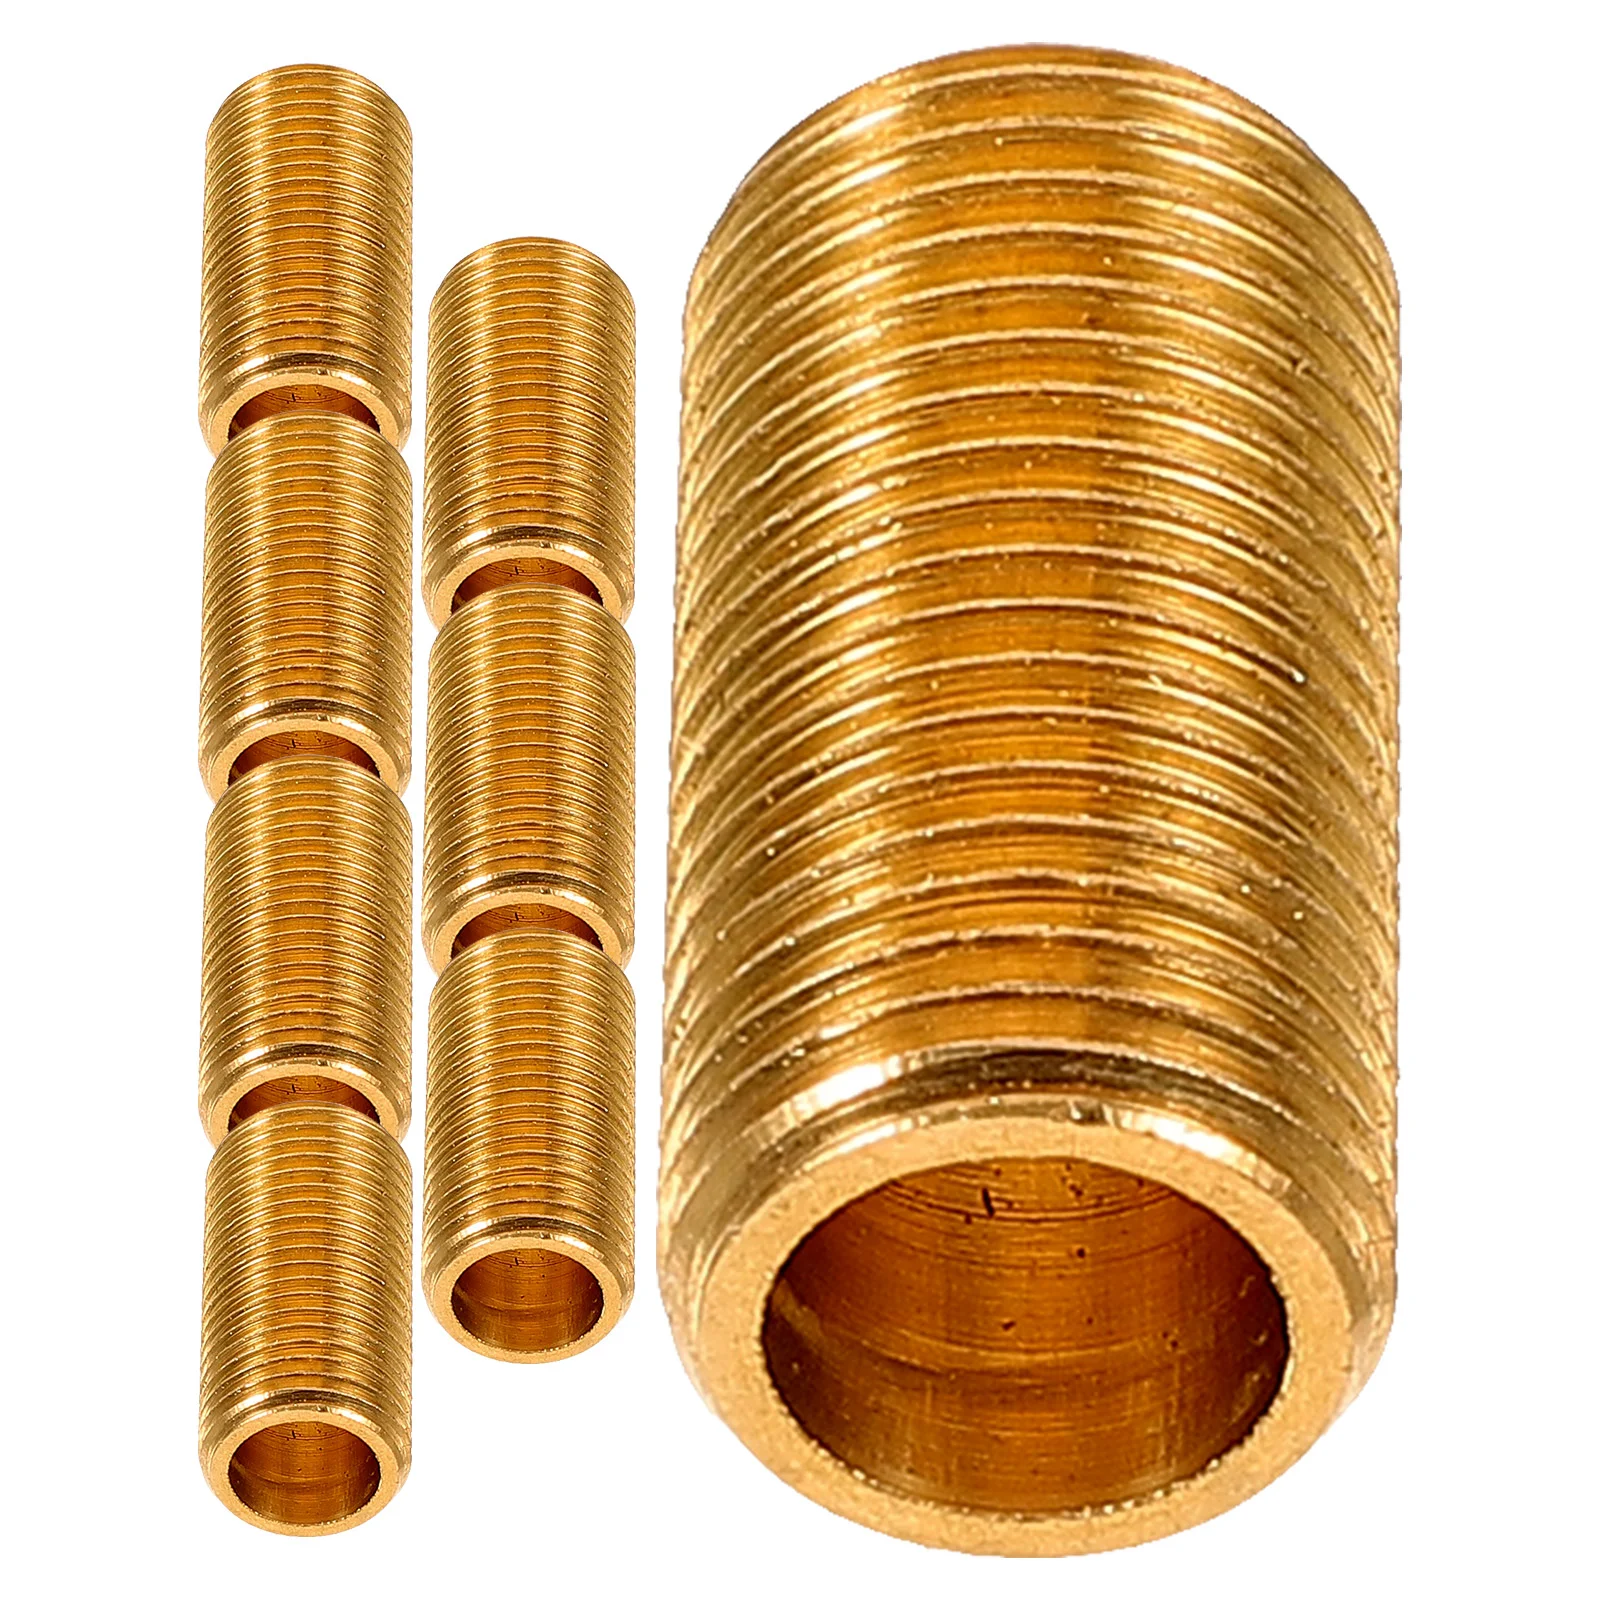 

8 Pcs Brass Dental Tube Pendant Light Fixtures Extension Rod Coupling Lamp Hardware for Copper Repair Kit Thread